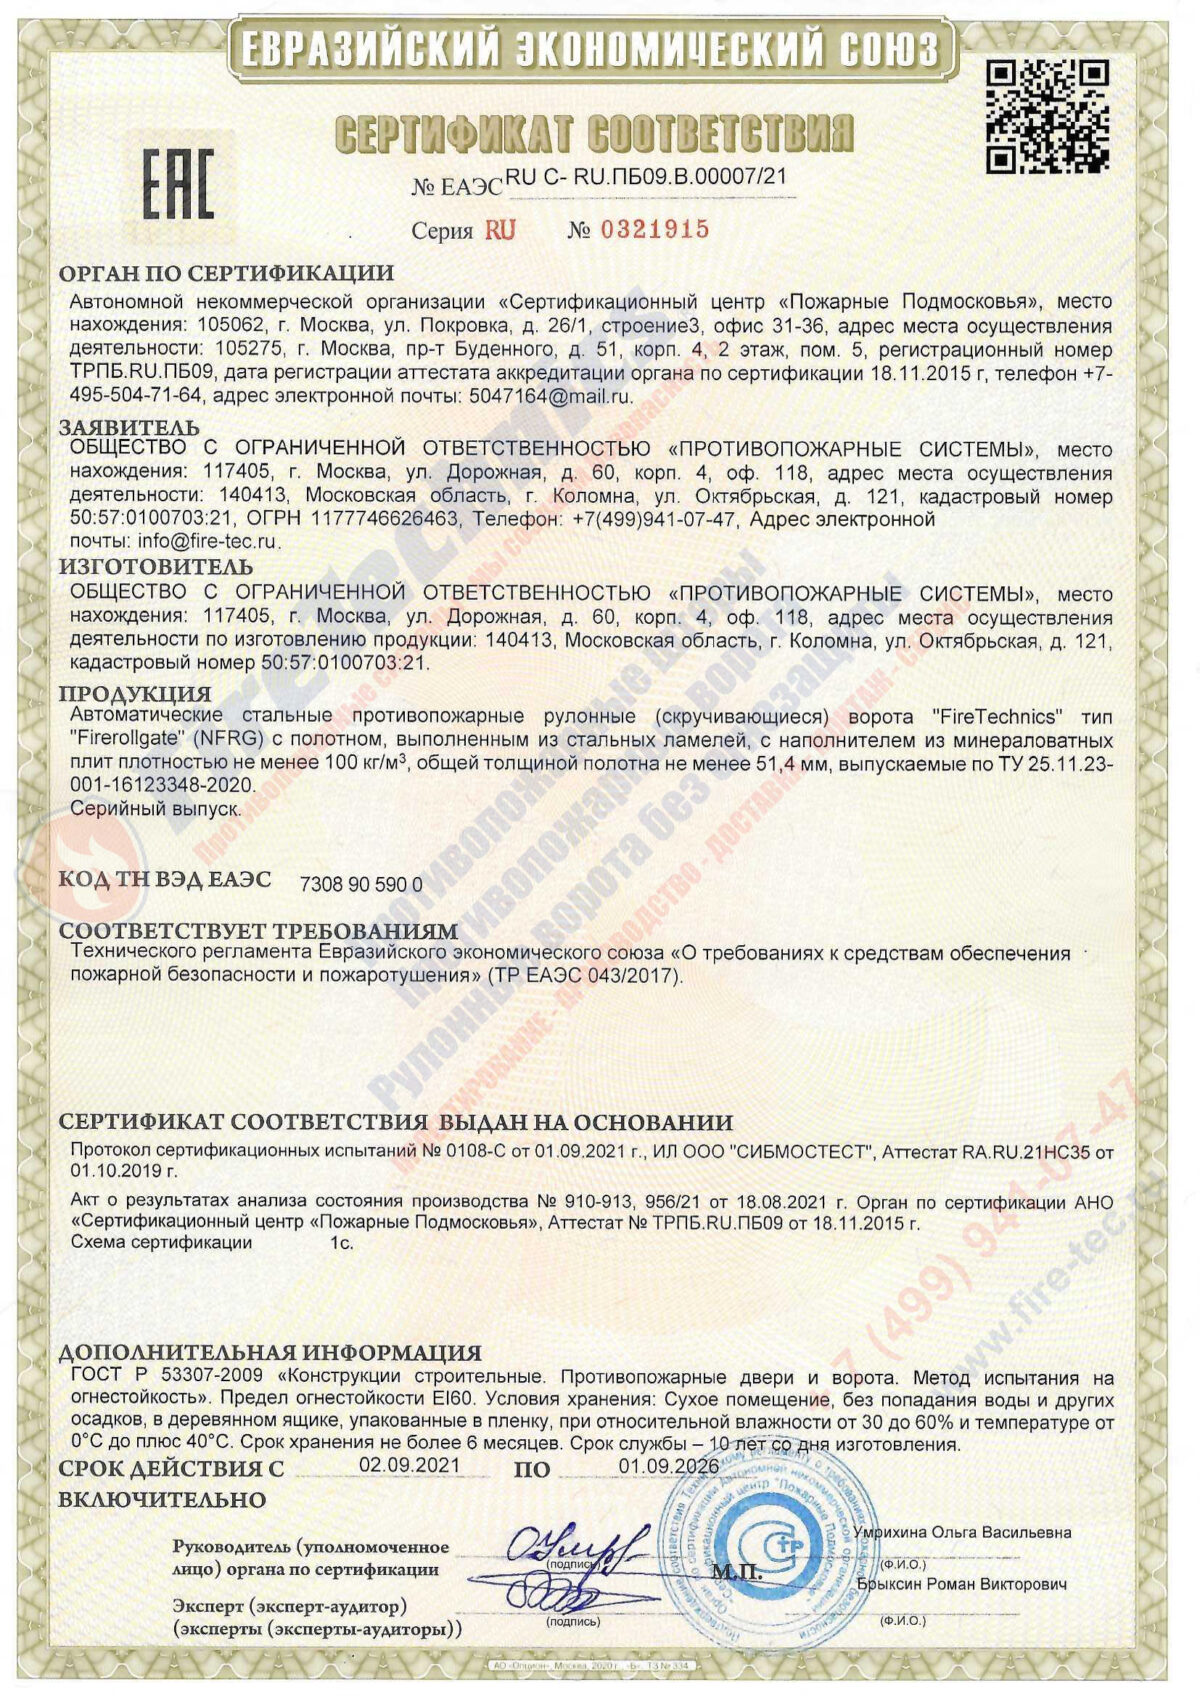 Казахстан. Получен сертификат соответствия ЕАЭС